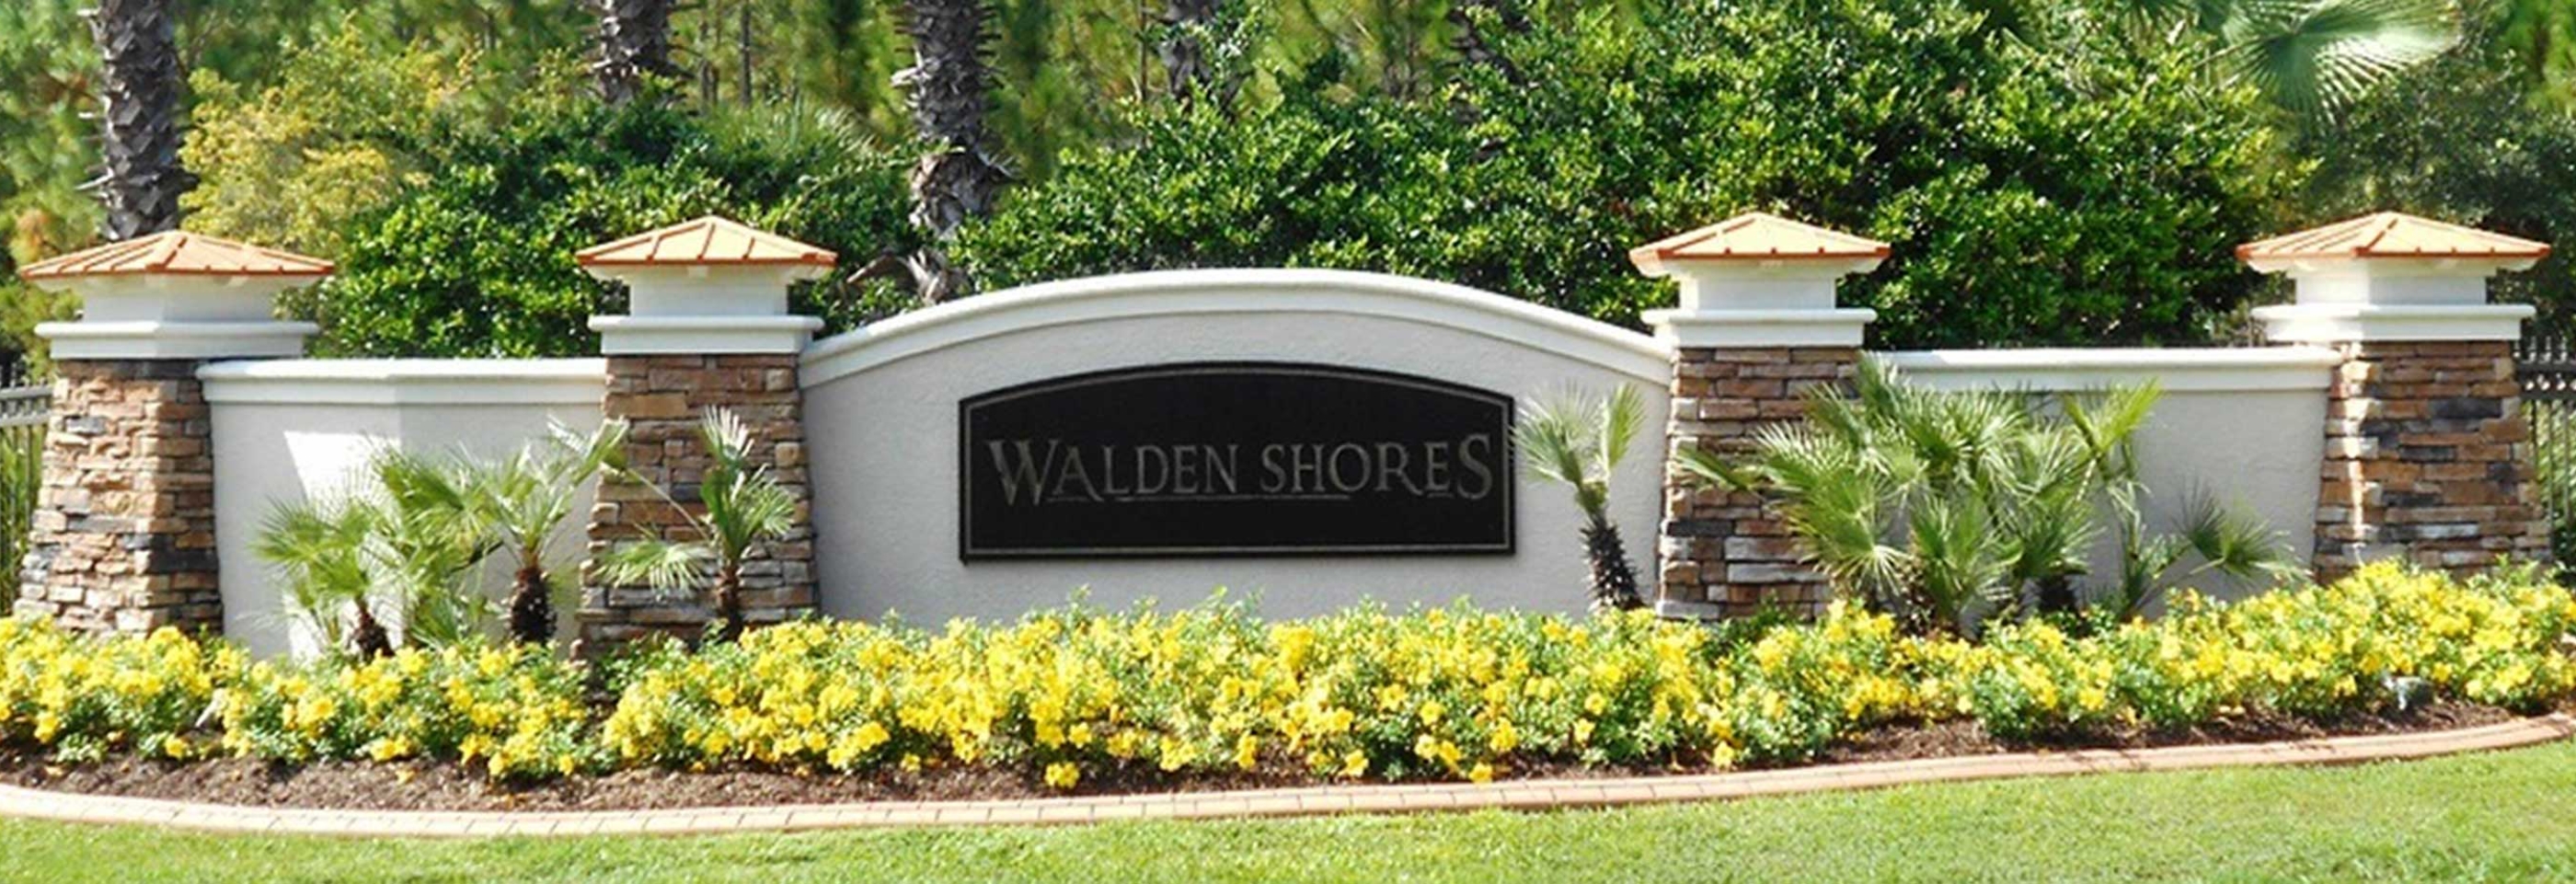 Front sign at Walden Shores